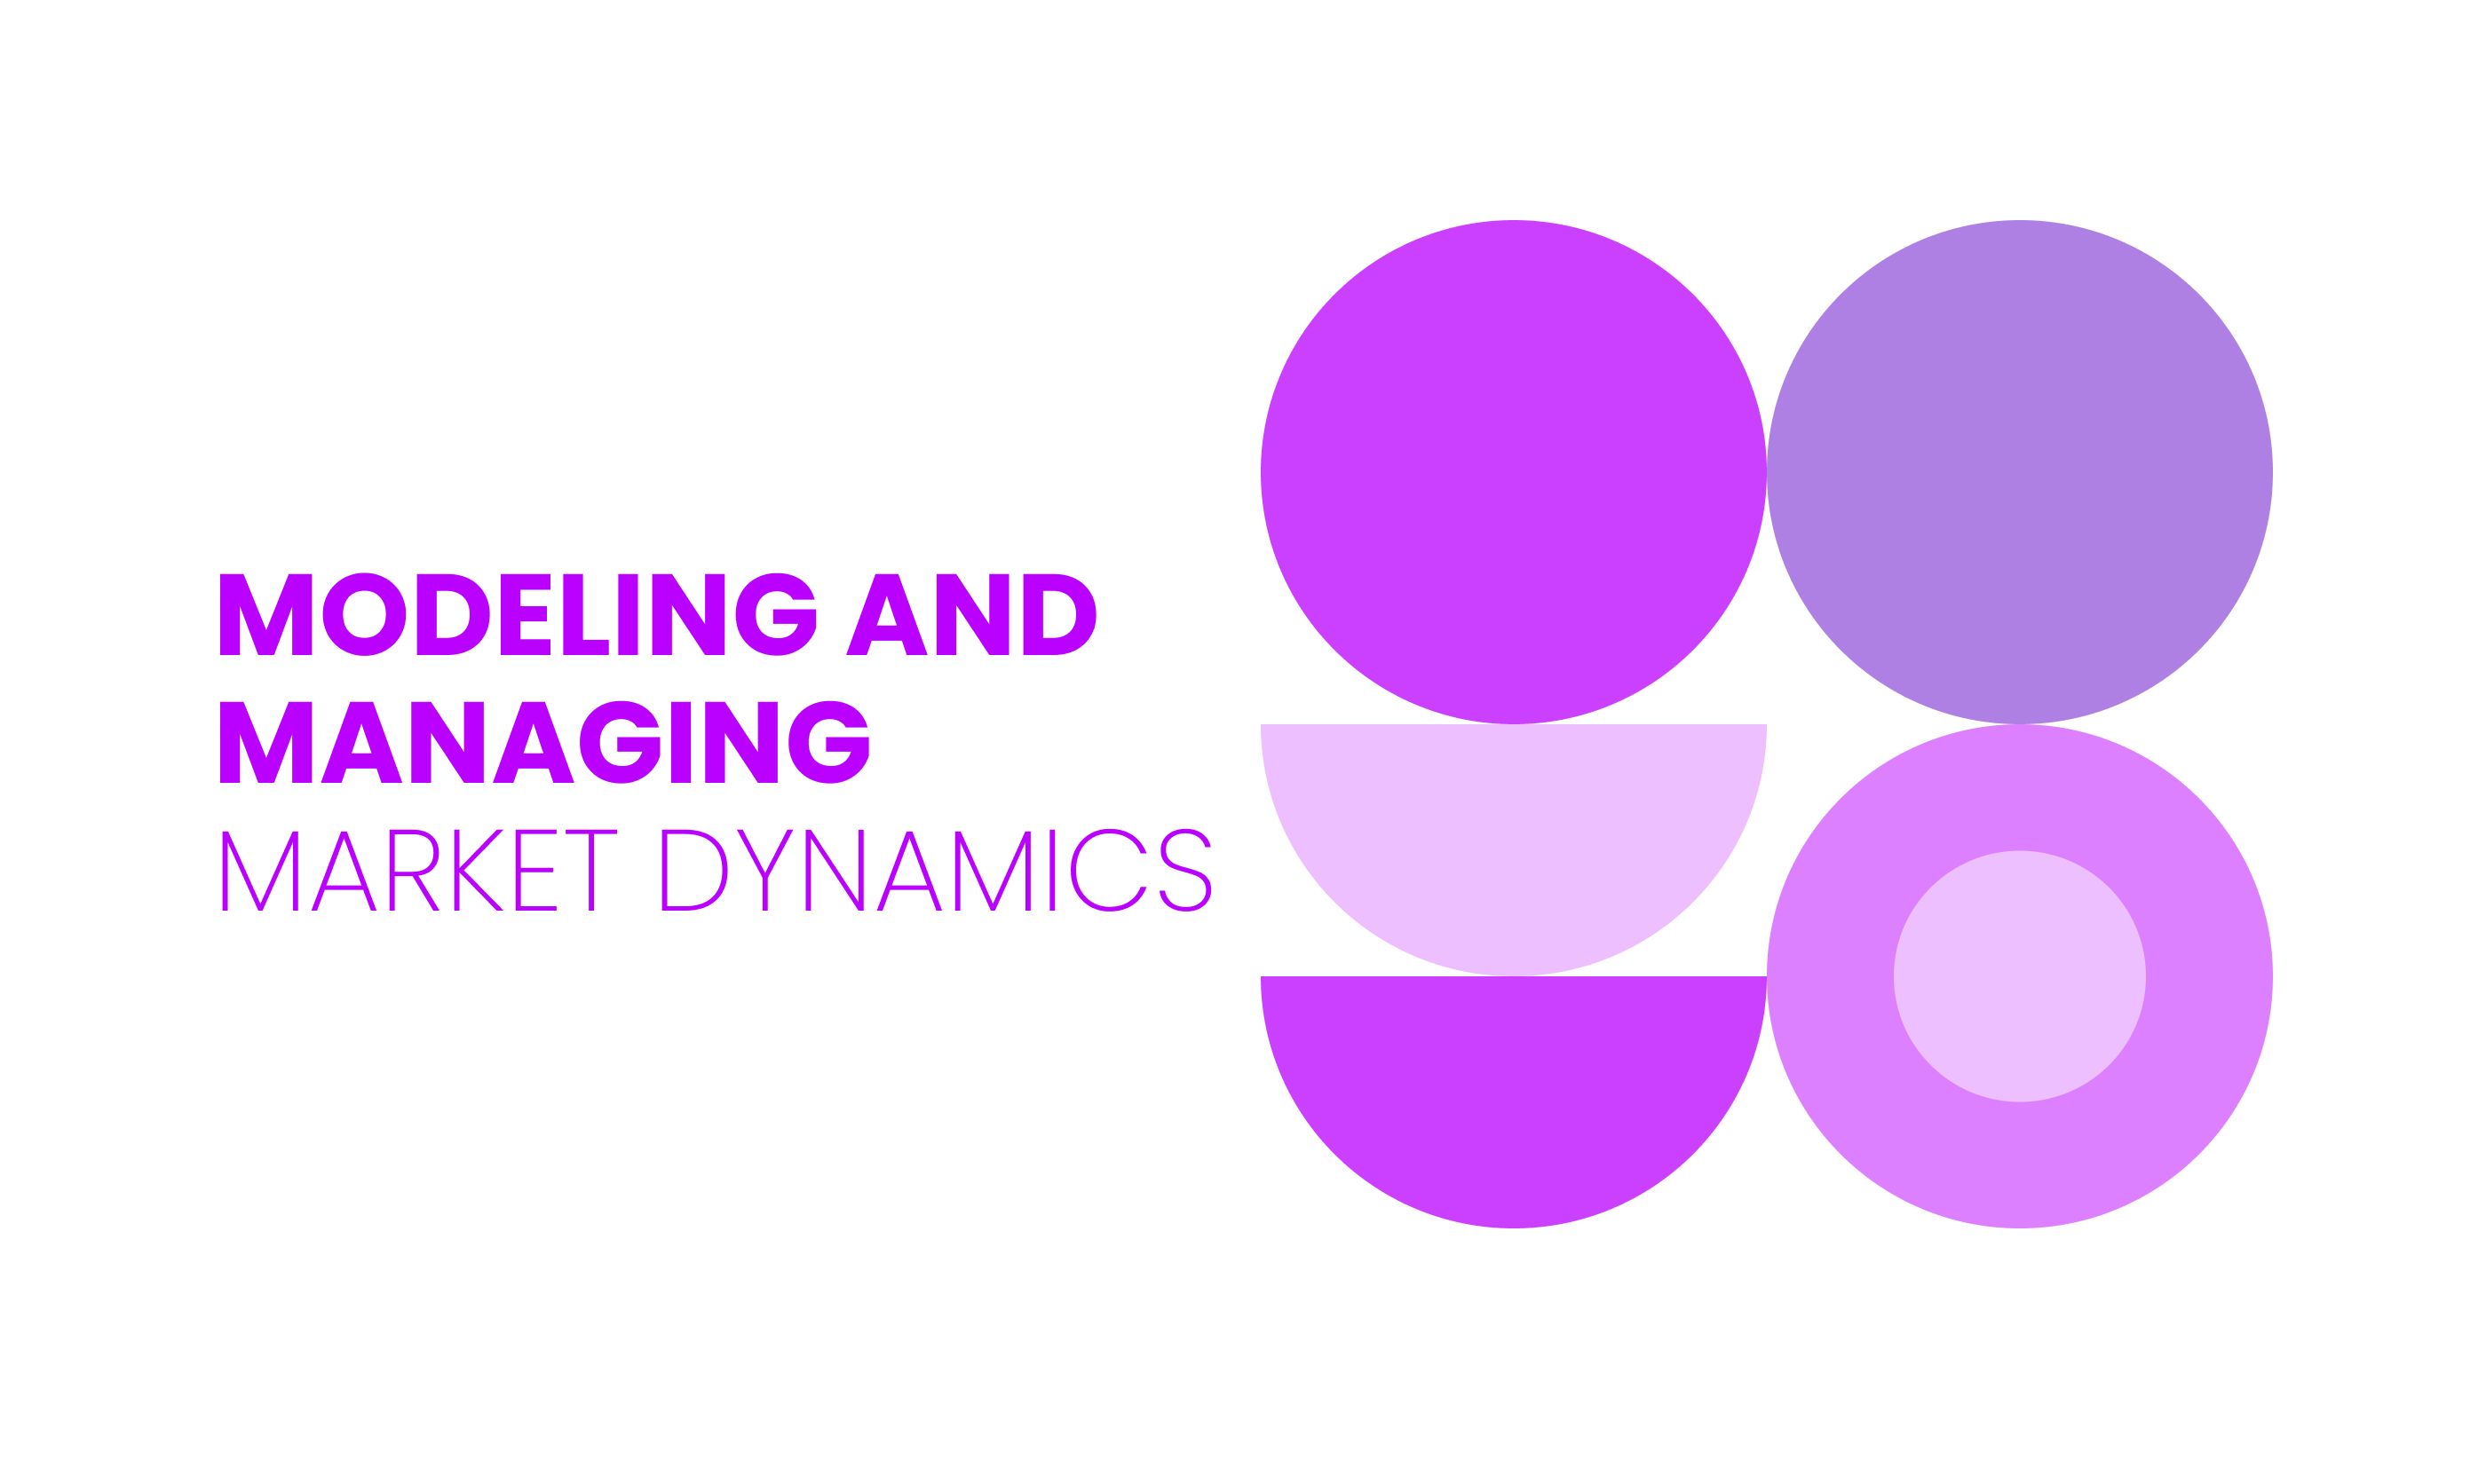 Modeling and managing market dynamics